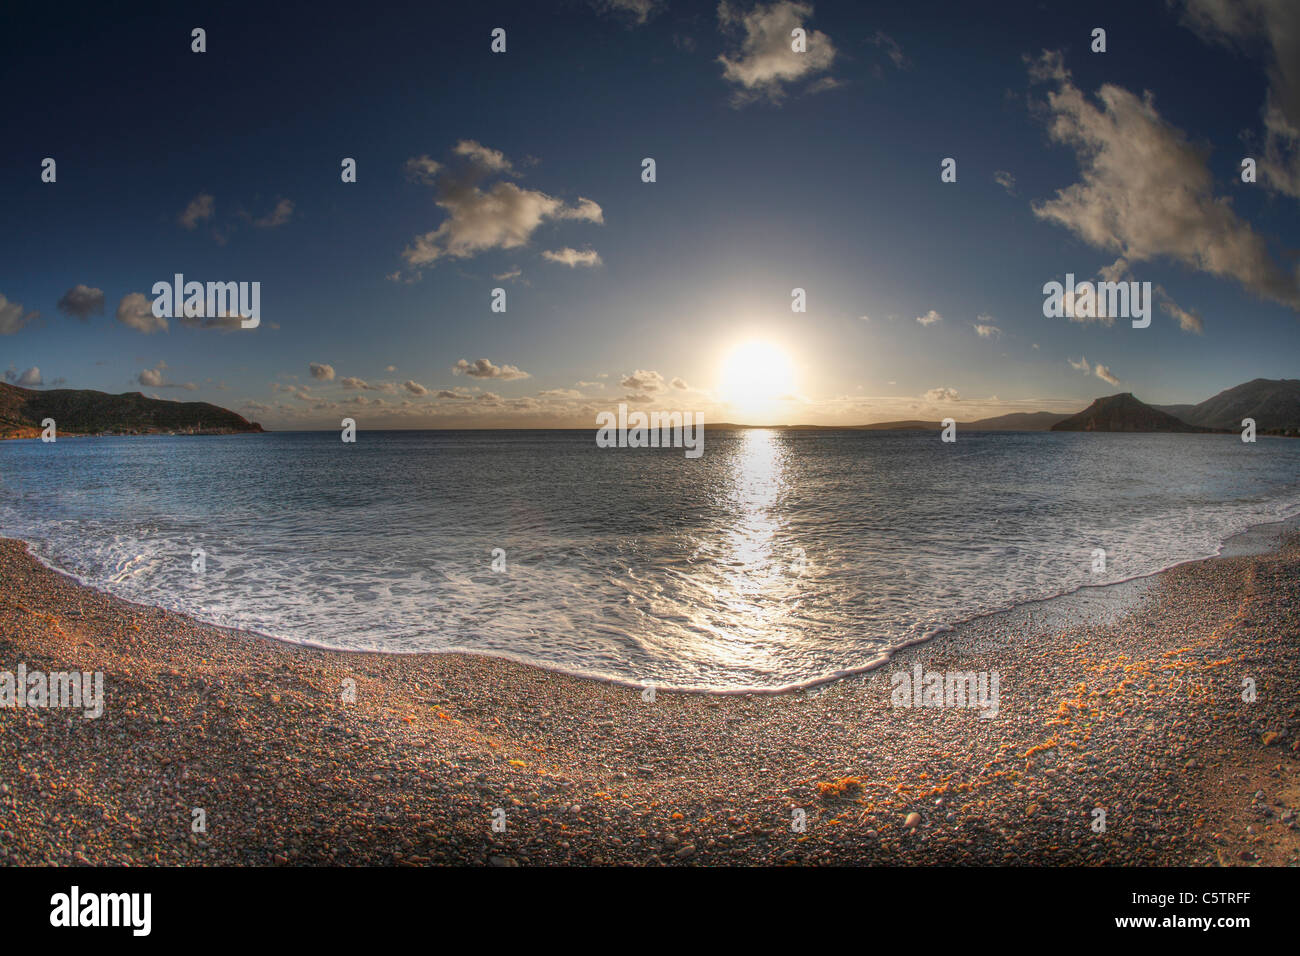 Greece, Crete, Palekastro, View of sunrise at beach Stock Photo